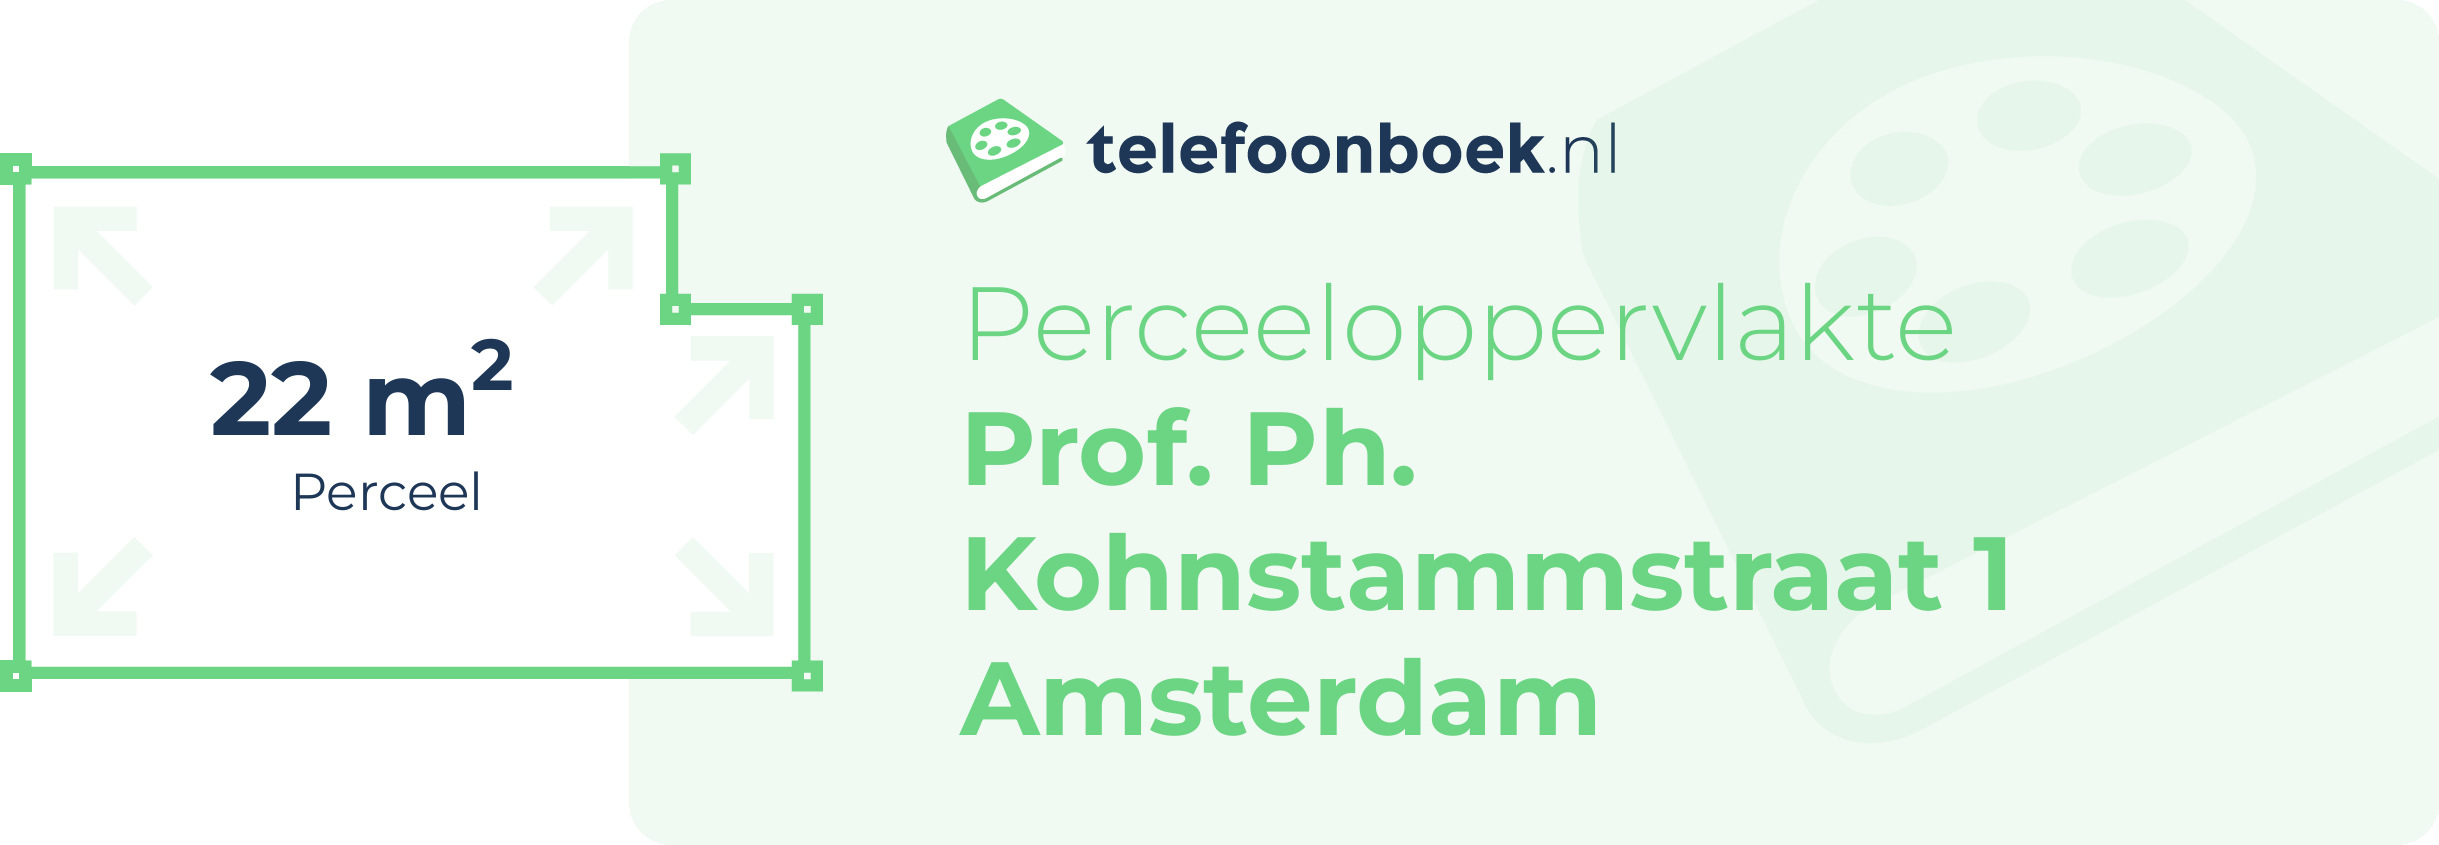 Perceeloppervlakte Prof. Ph. Kohnstammstraat 1 Amsterdam